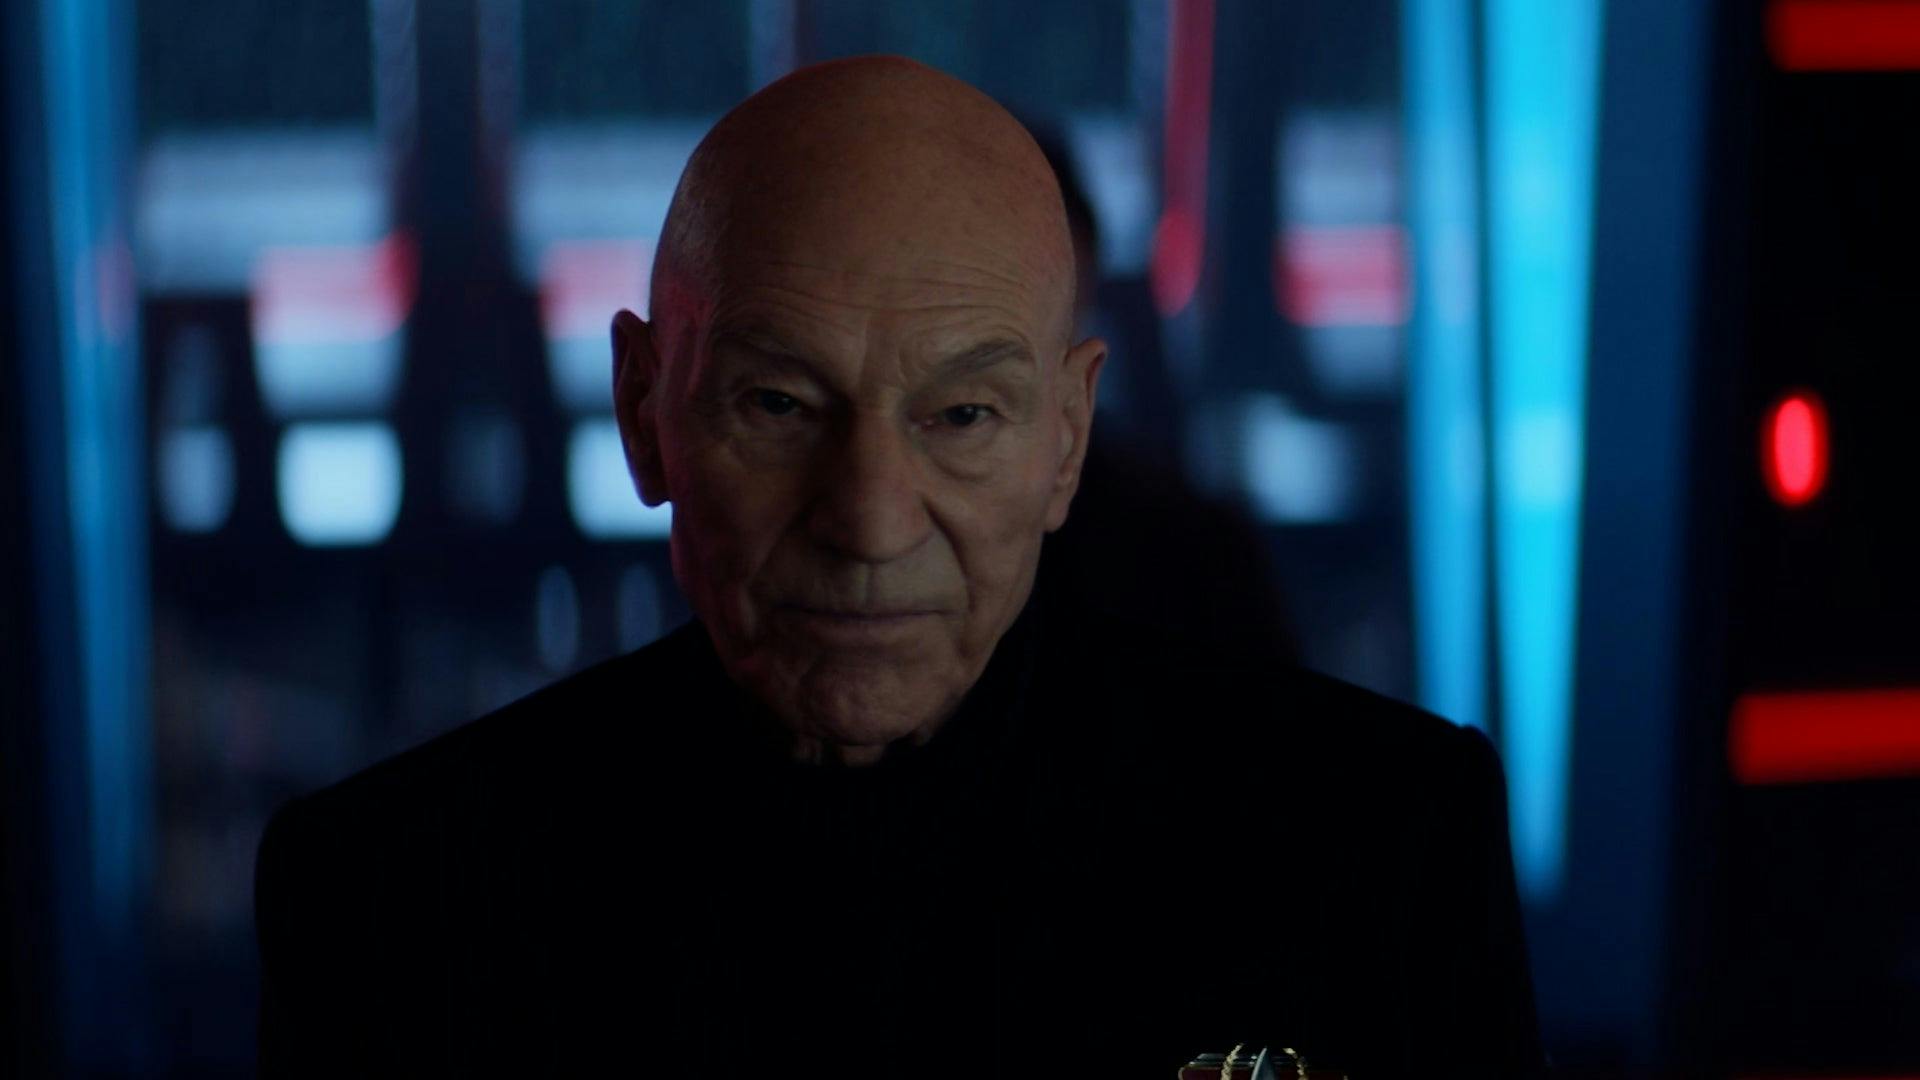 Star Trek: Picard - The Final Season Sets Course for Blu-ray, DVD